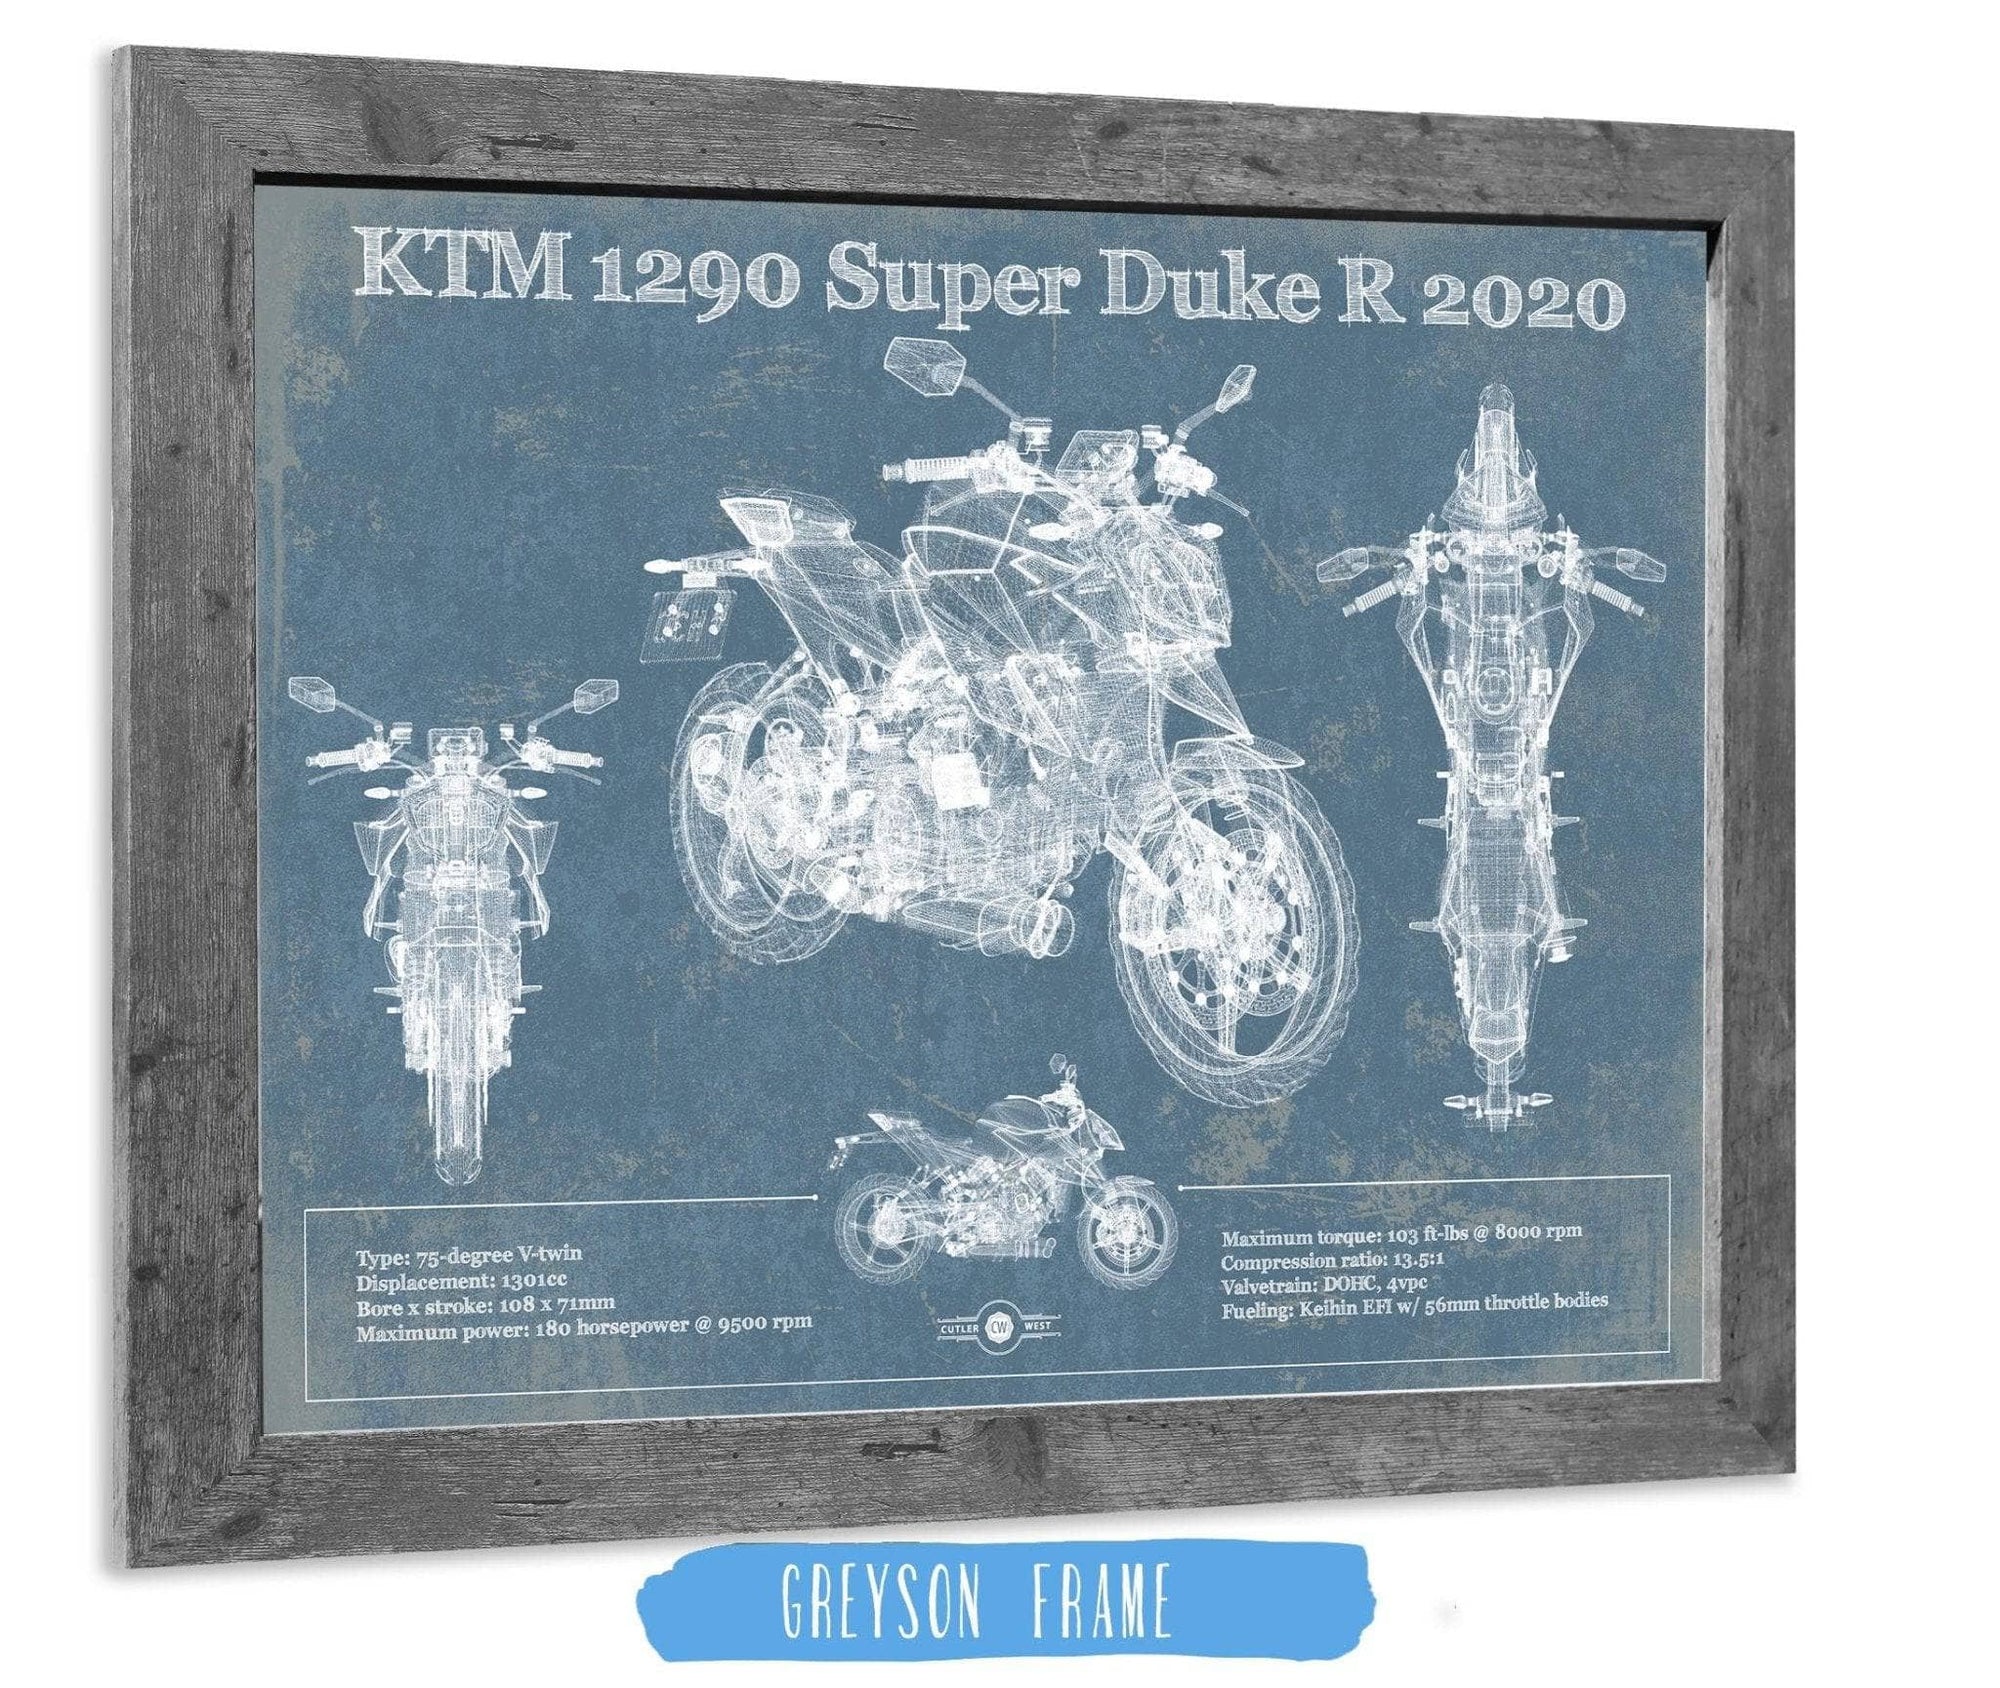 Cutler West 14" x 11" / Greyson Frame 2020 KTM 1290 Super Duke R Motorcycle Patent Print 845000242_8648